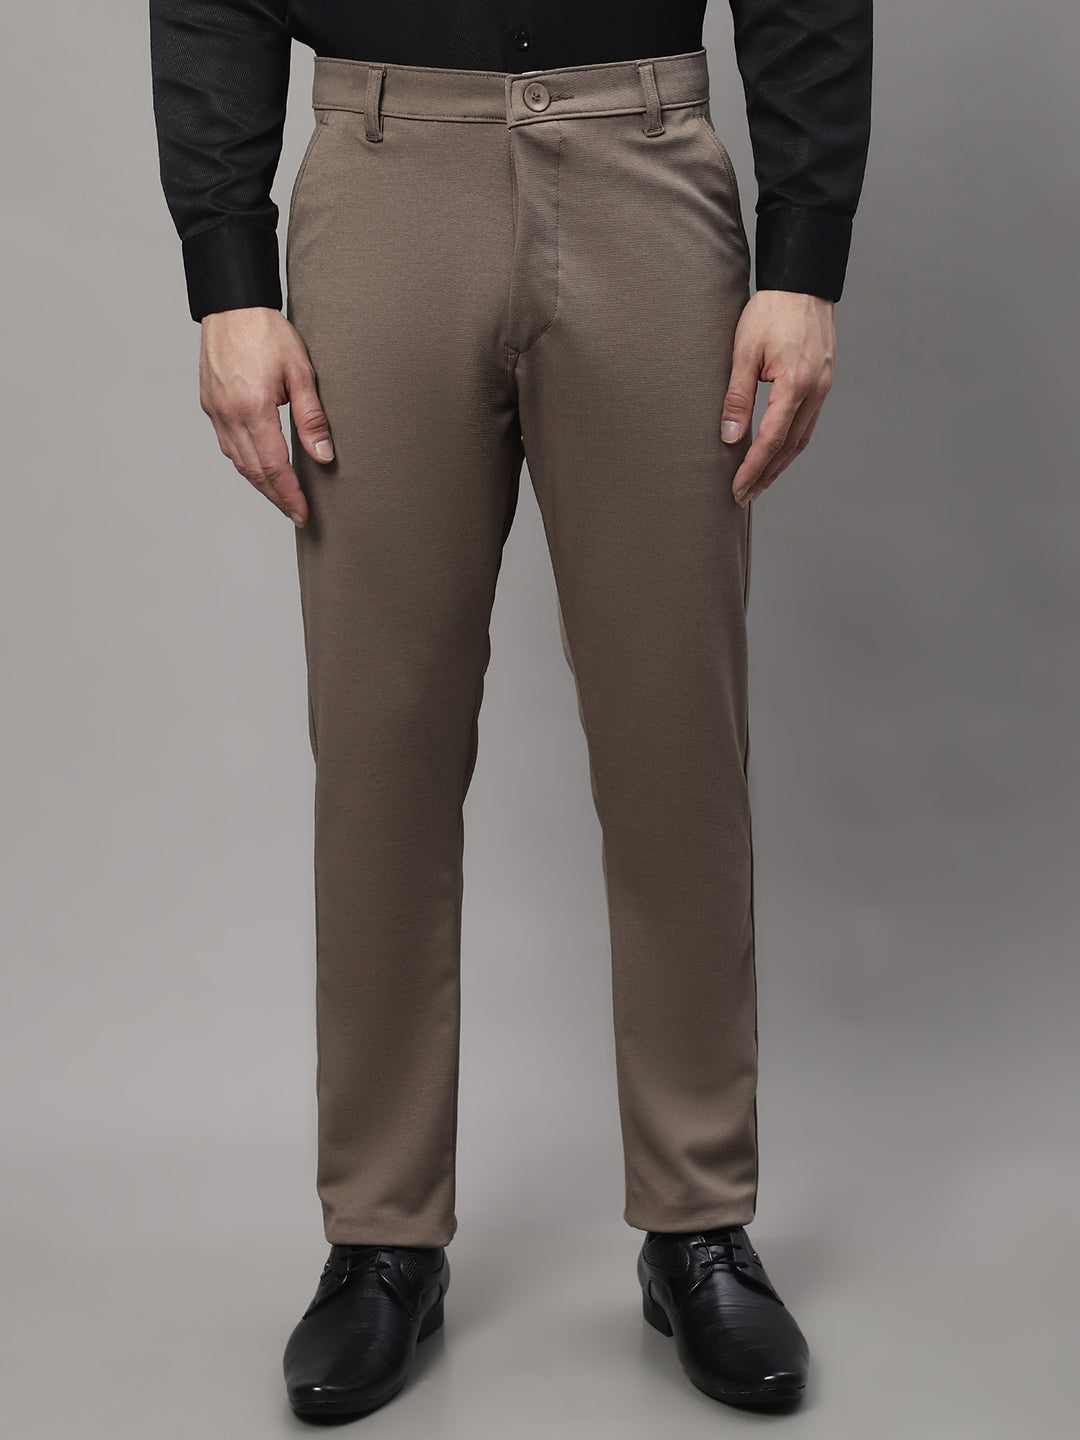 Jainish Men's Dark-Beige Tapered Fit Formal Trousers